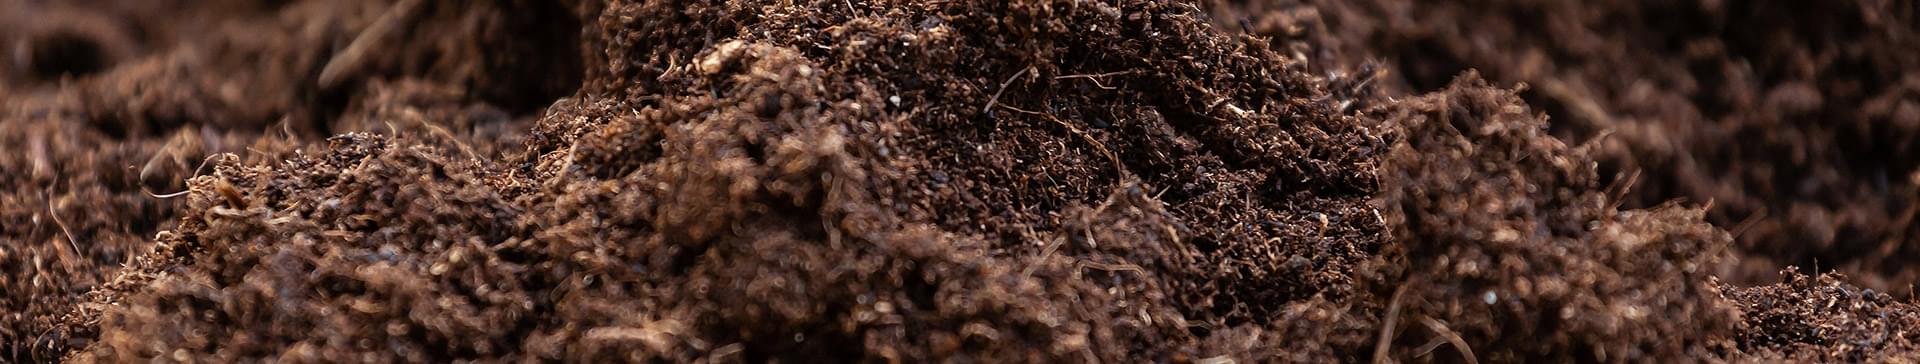 Organic universal soils without peat